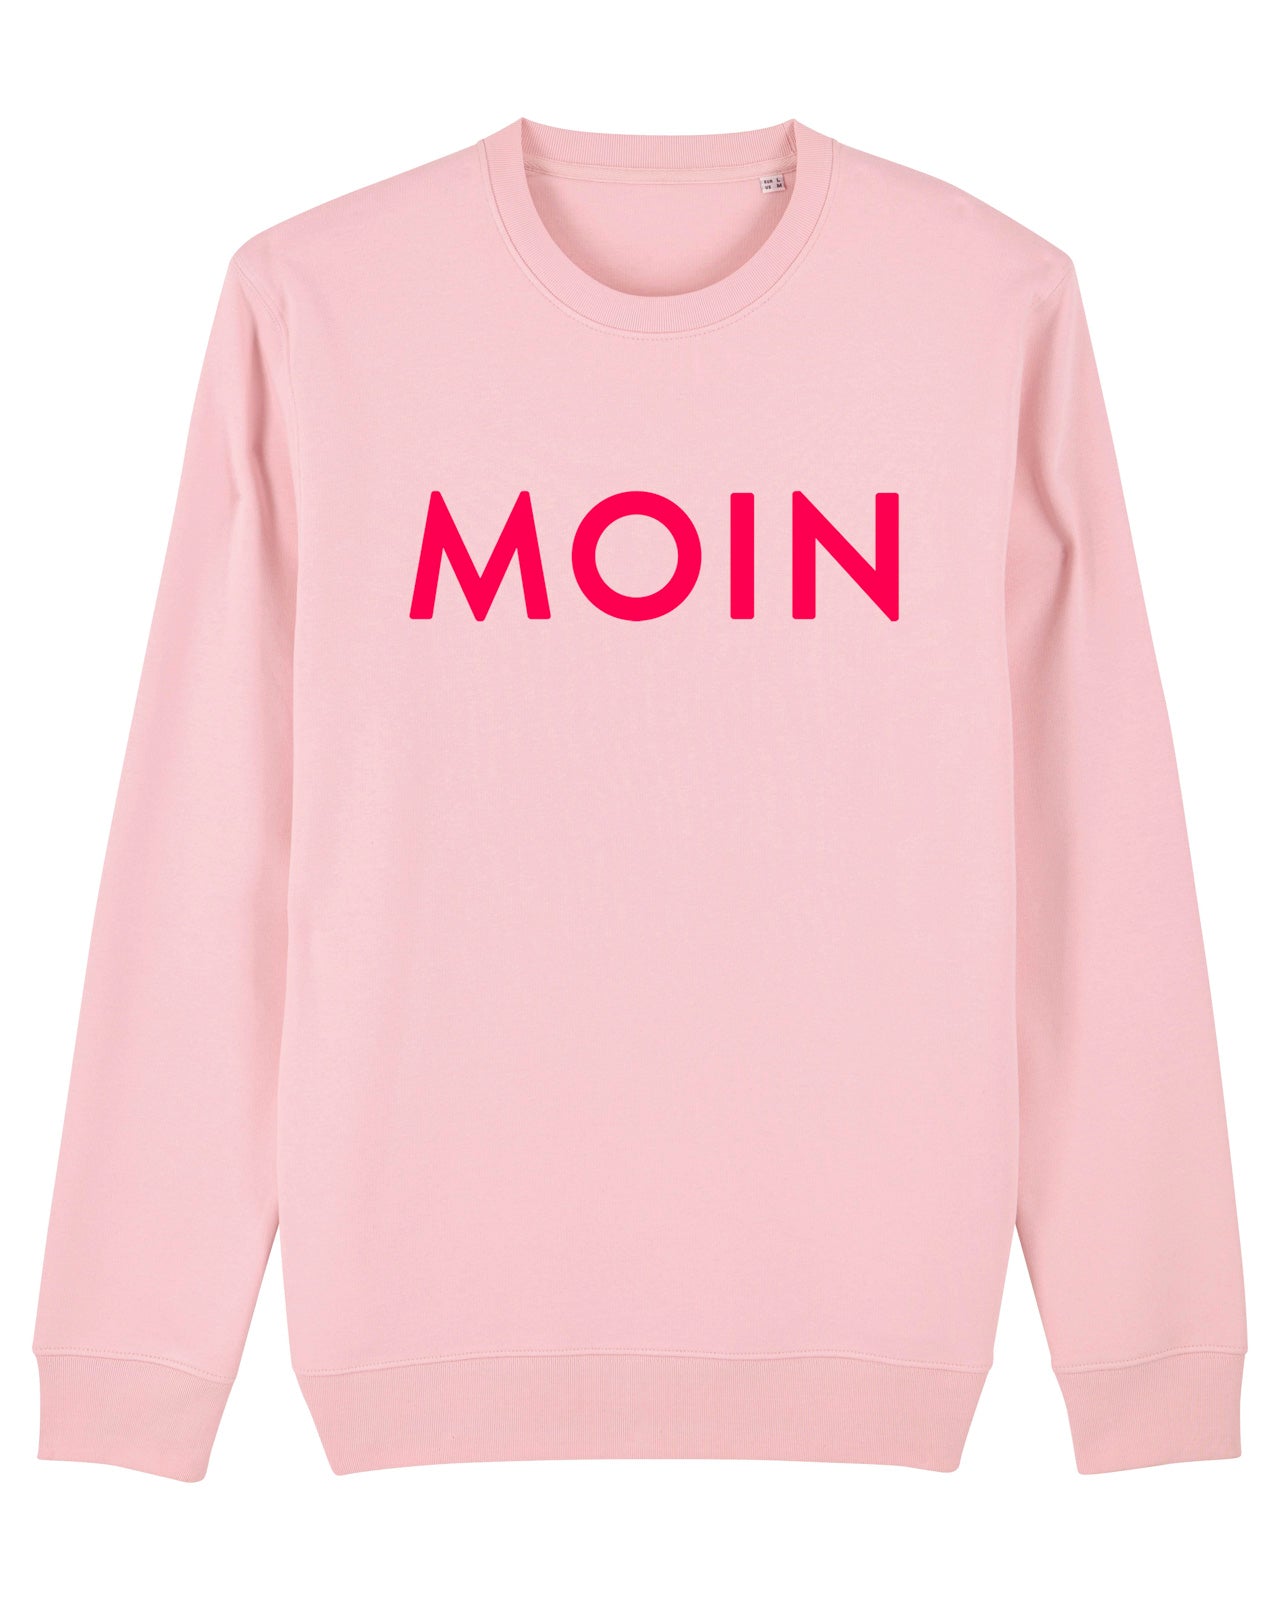 Sweatshirt "Moin" Cotton Pink/Neonrot